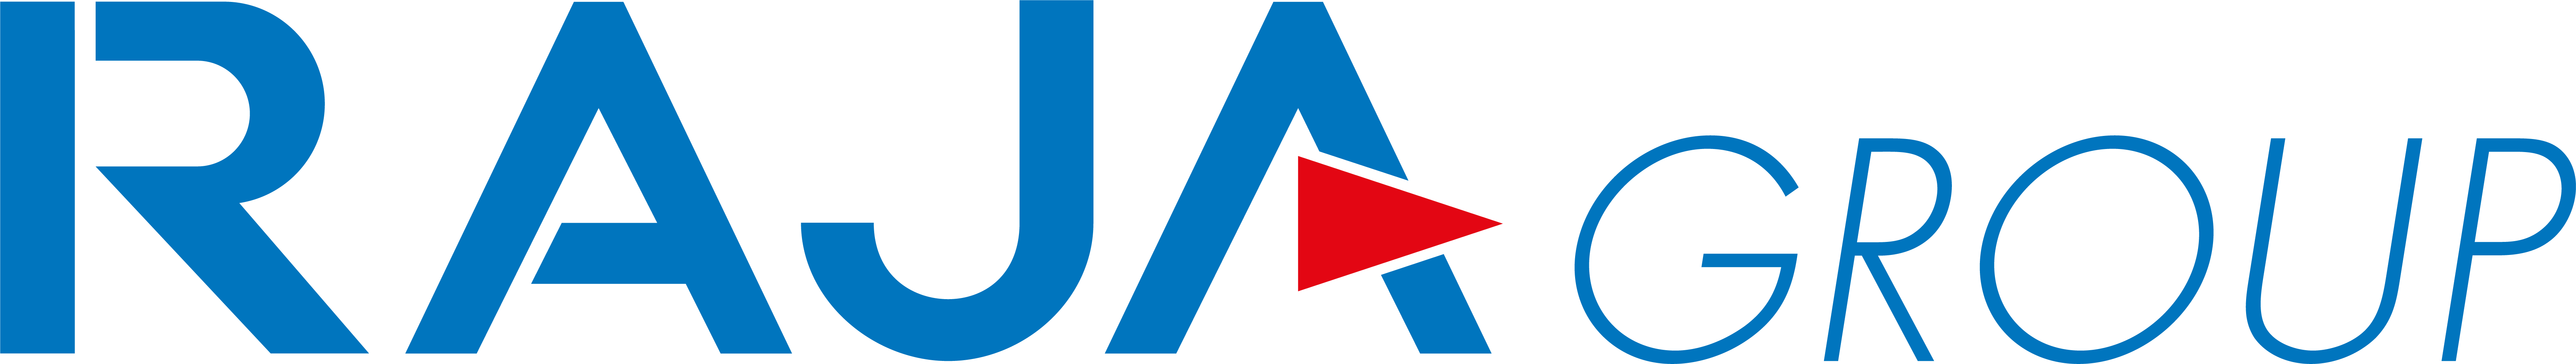 Raja Group logo